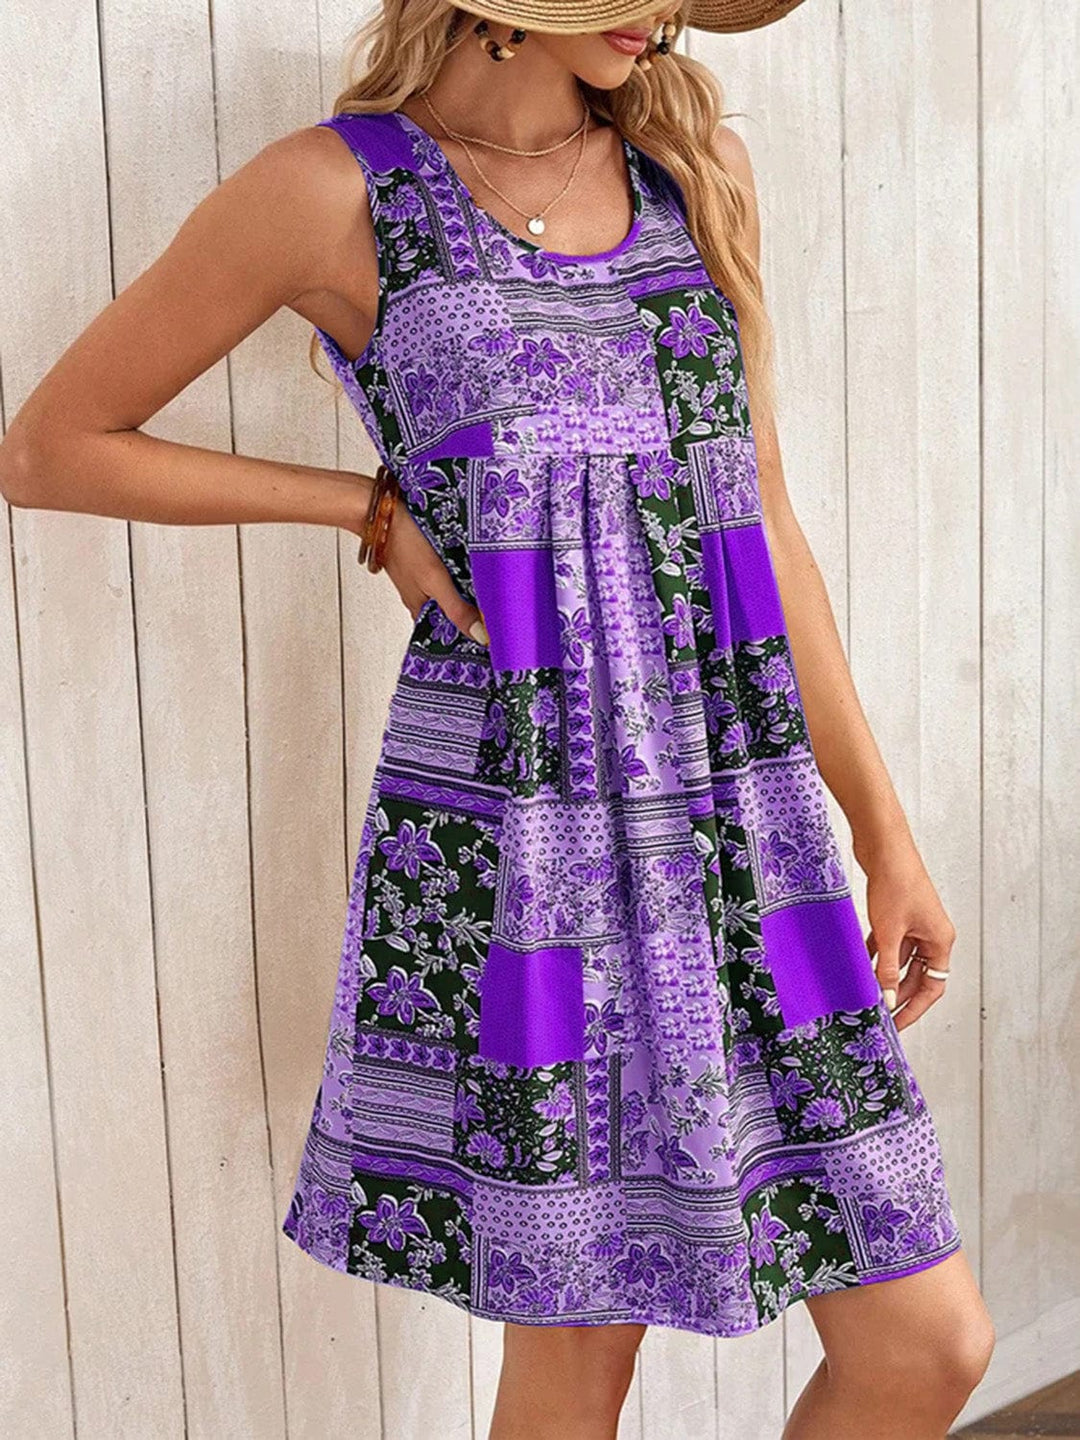 Trendsi dress Gypsy Fhy Sleeveless Mini Dress